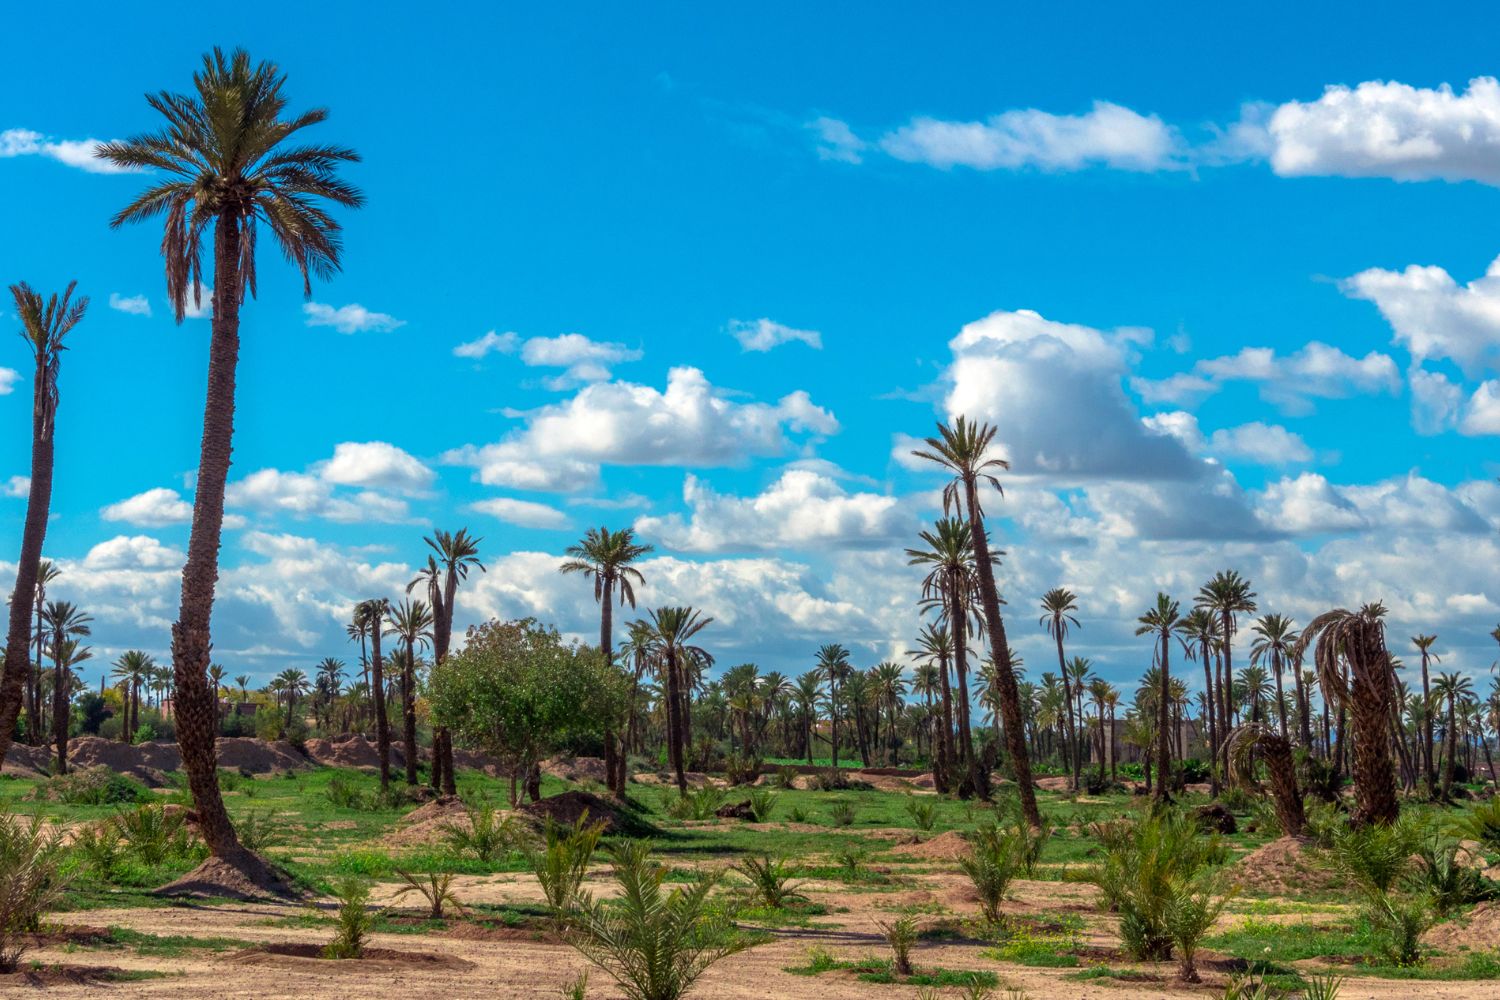 Palm Grove in Marrakech, Morocco